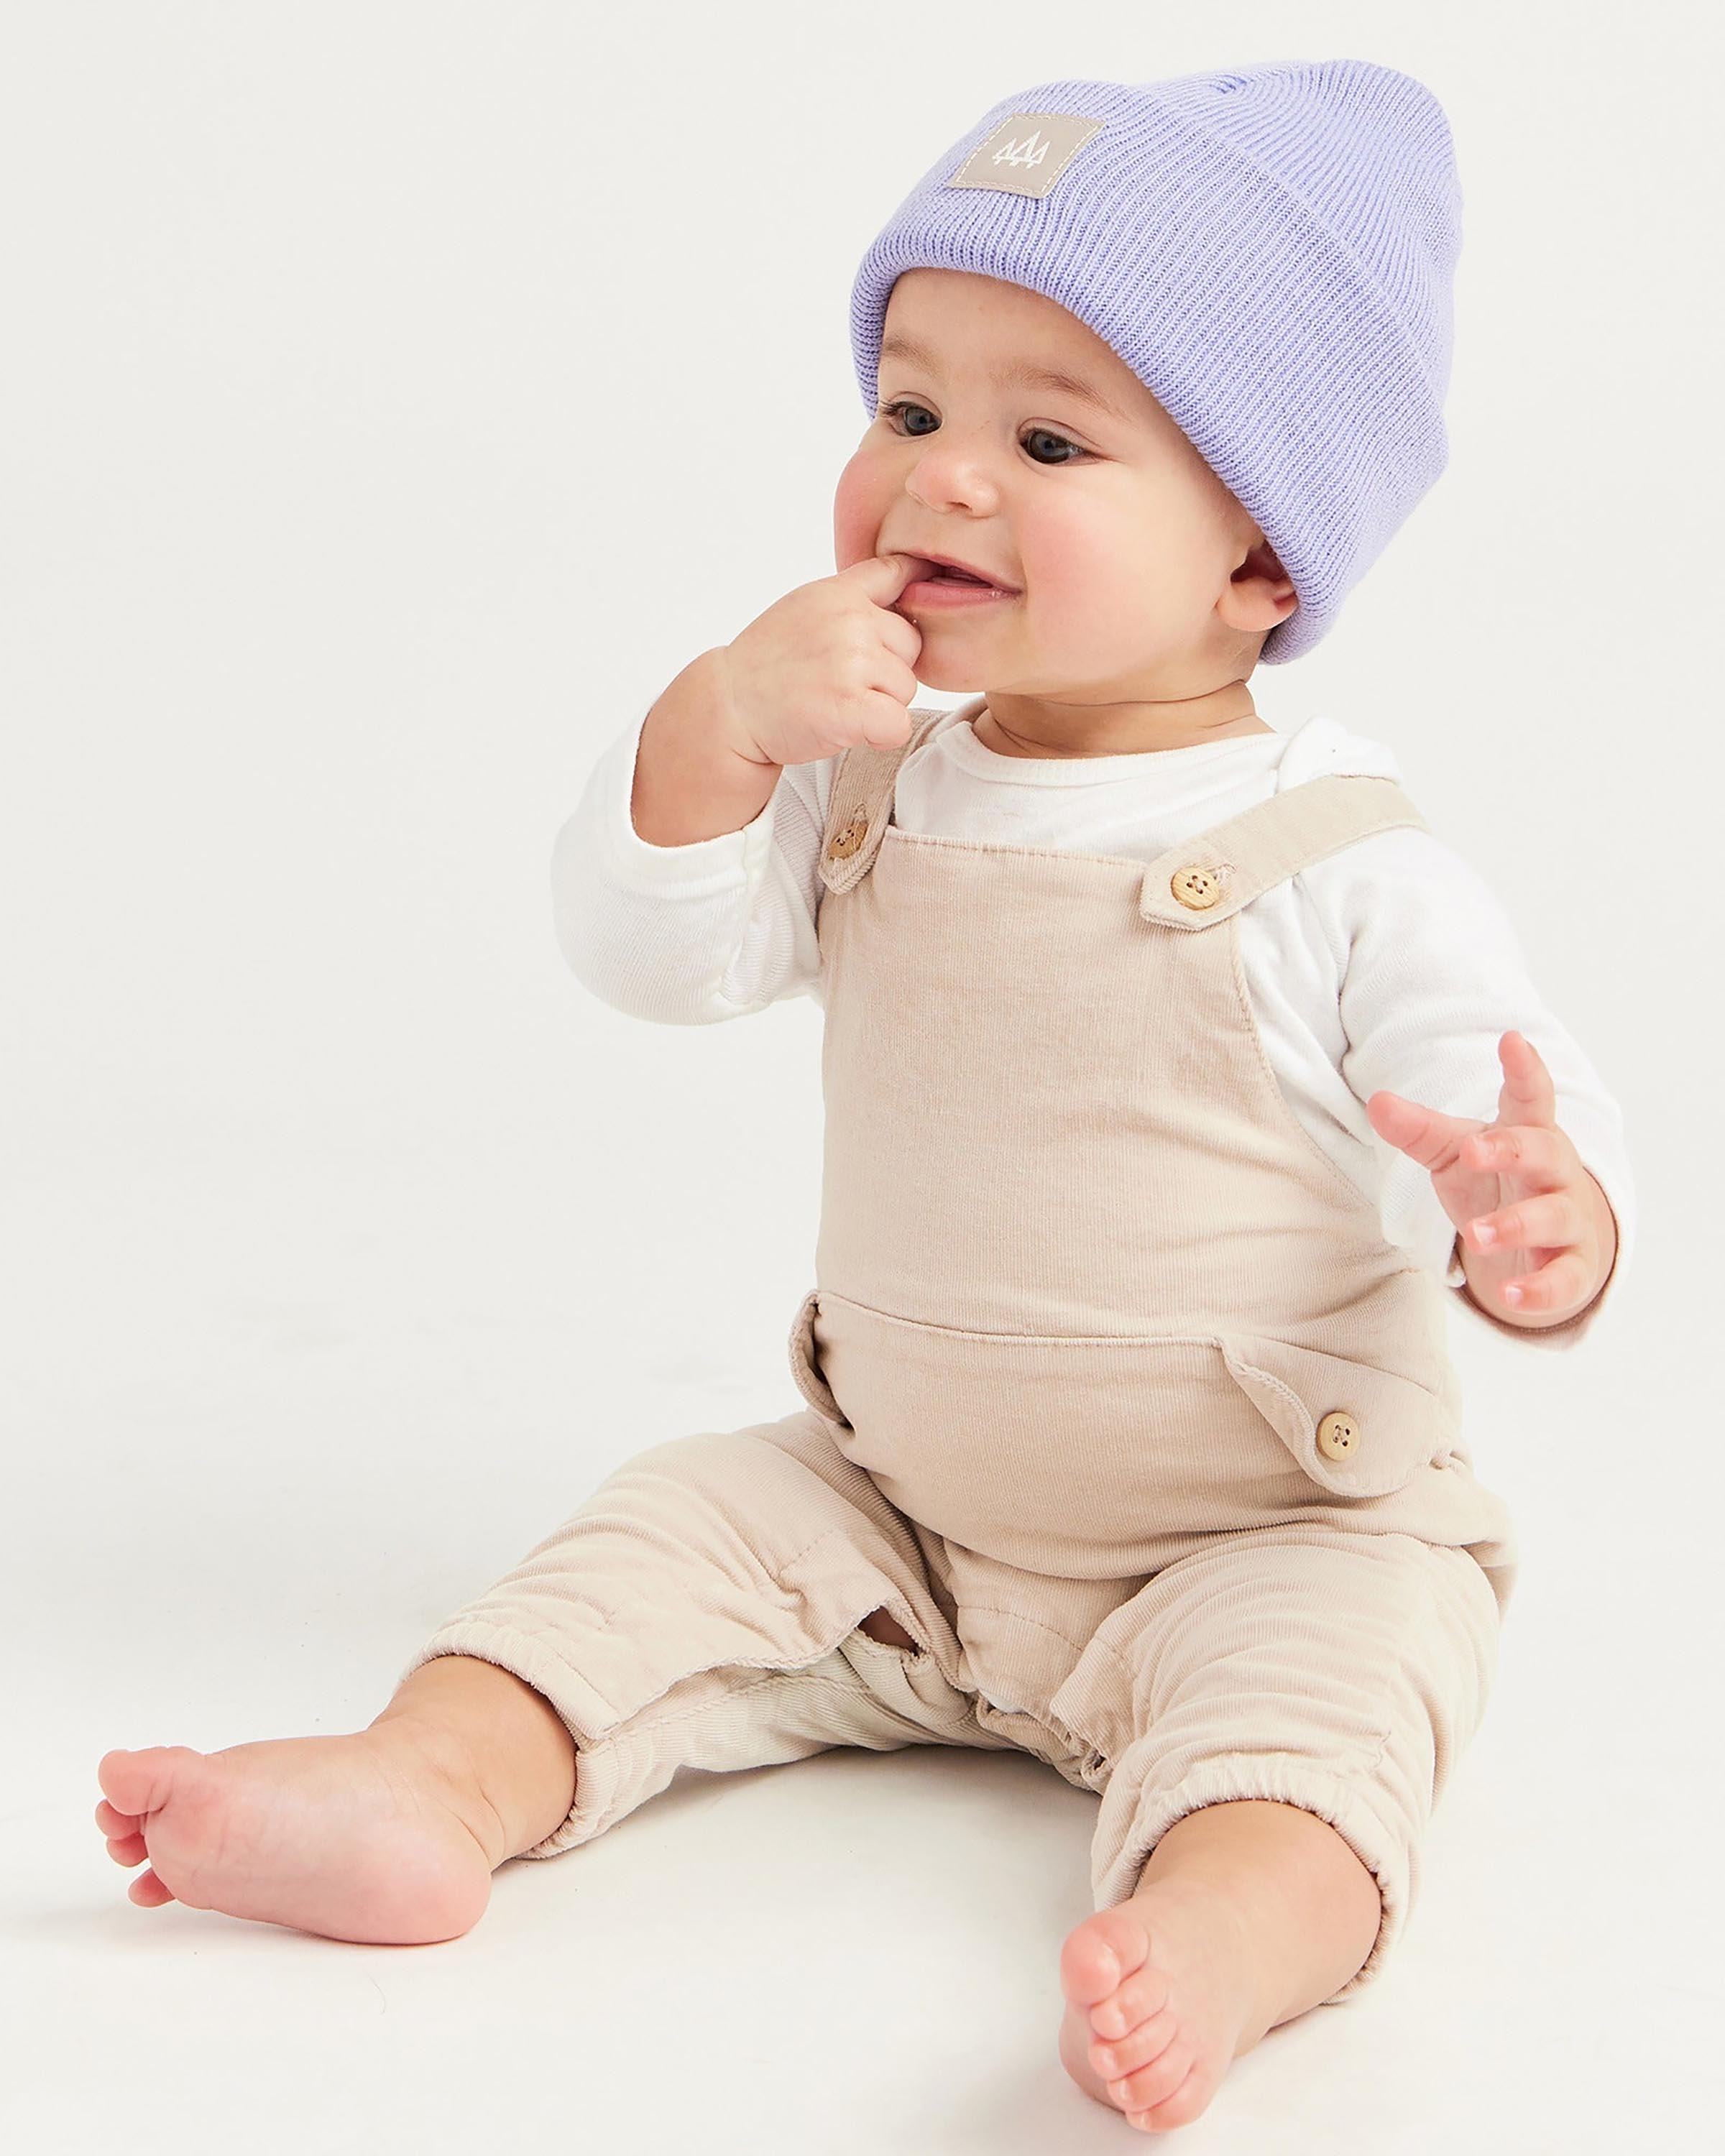 Baby Beacon Beanie in Lavender - undefined - Hemlock Hat Co. Beanies - Baby